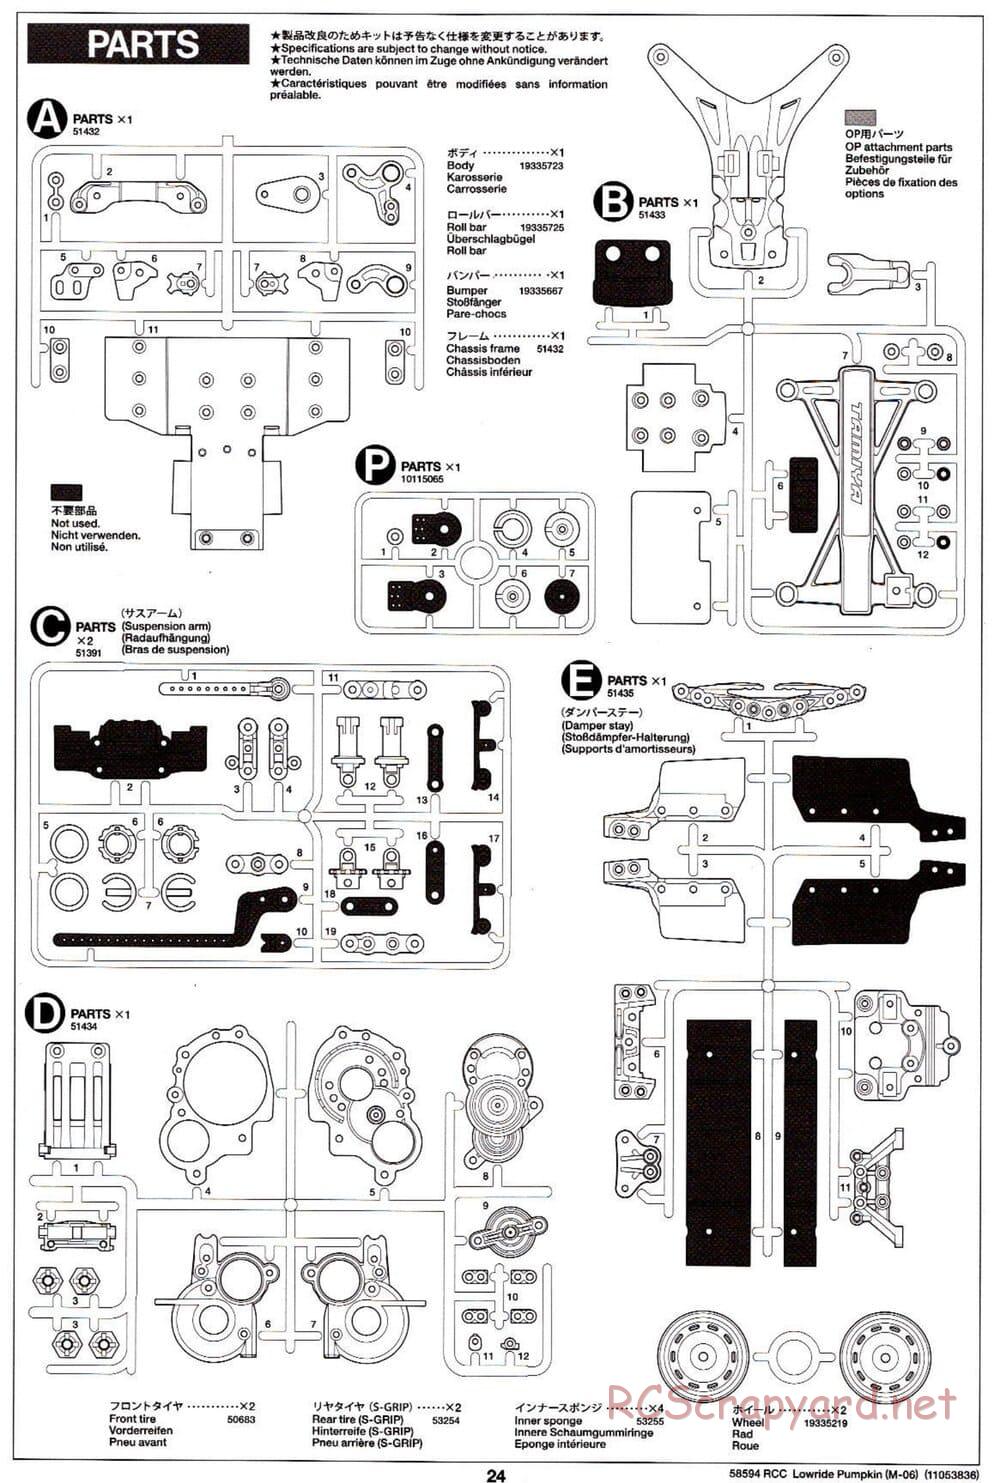 Tamiya - Lowride Pumpkin - M-06 Chassis - Manual - Page 24